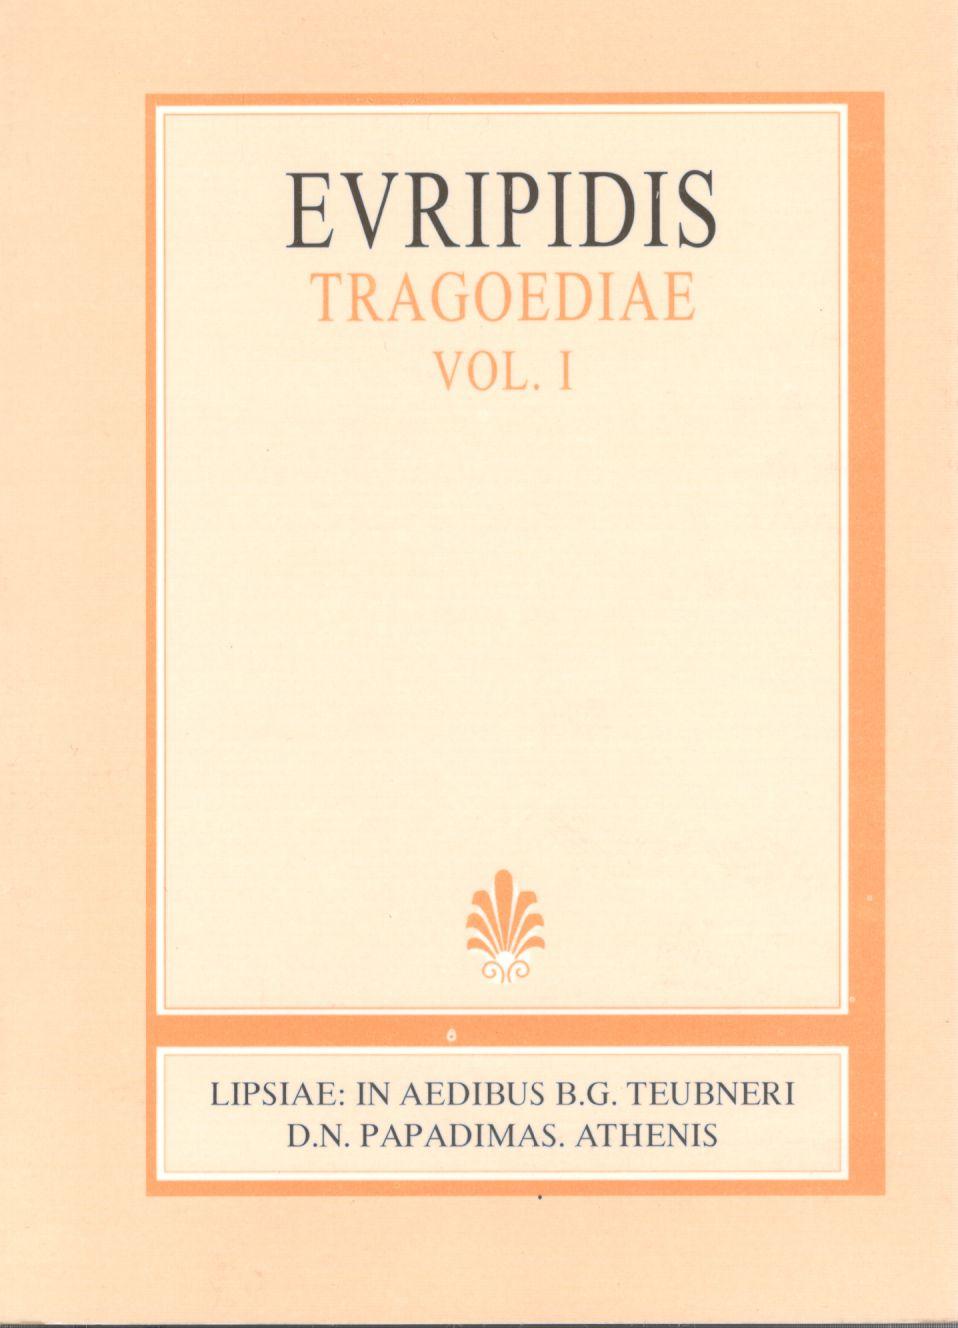 Evripidis, Τragoediae, Vol. I [Ευριπίδου, Τραγωδίαι, τ. Α